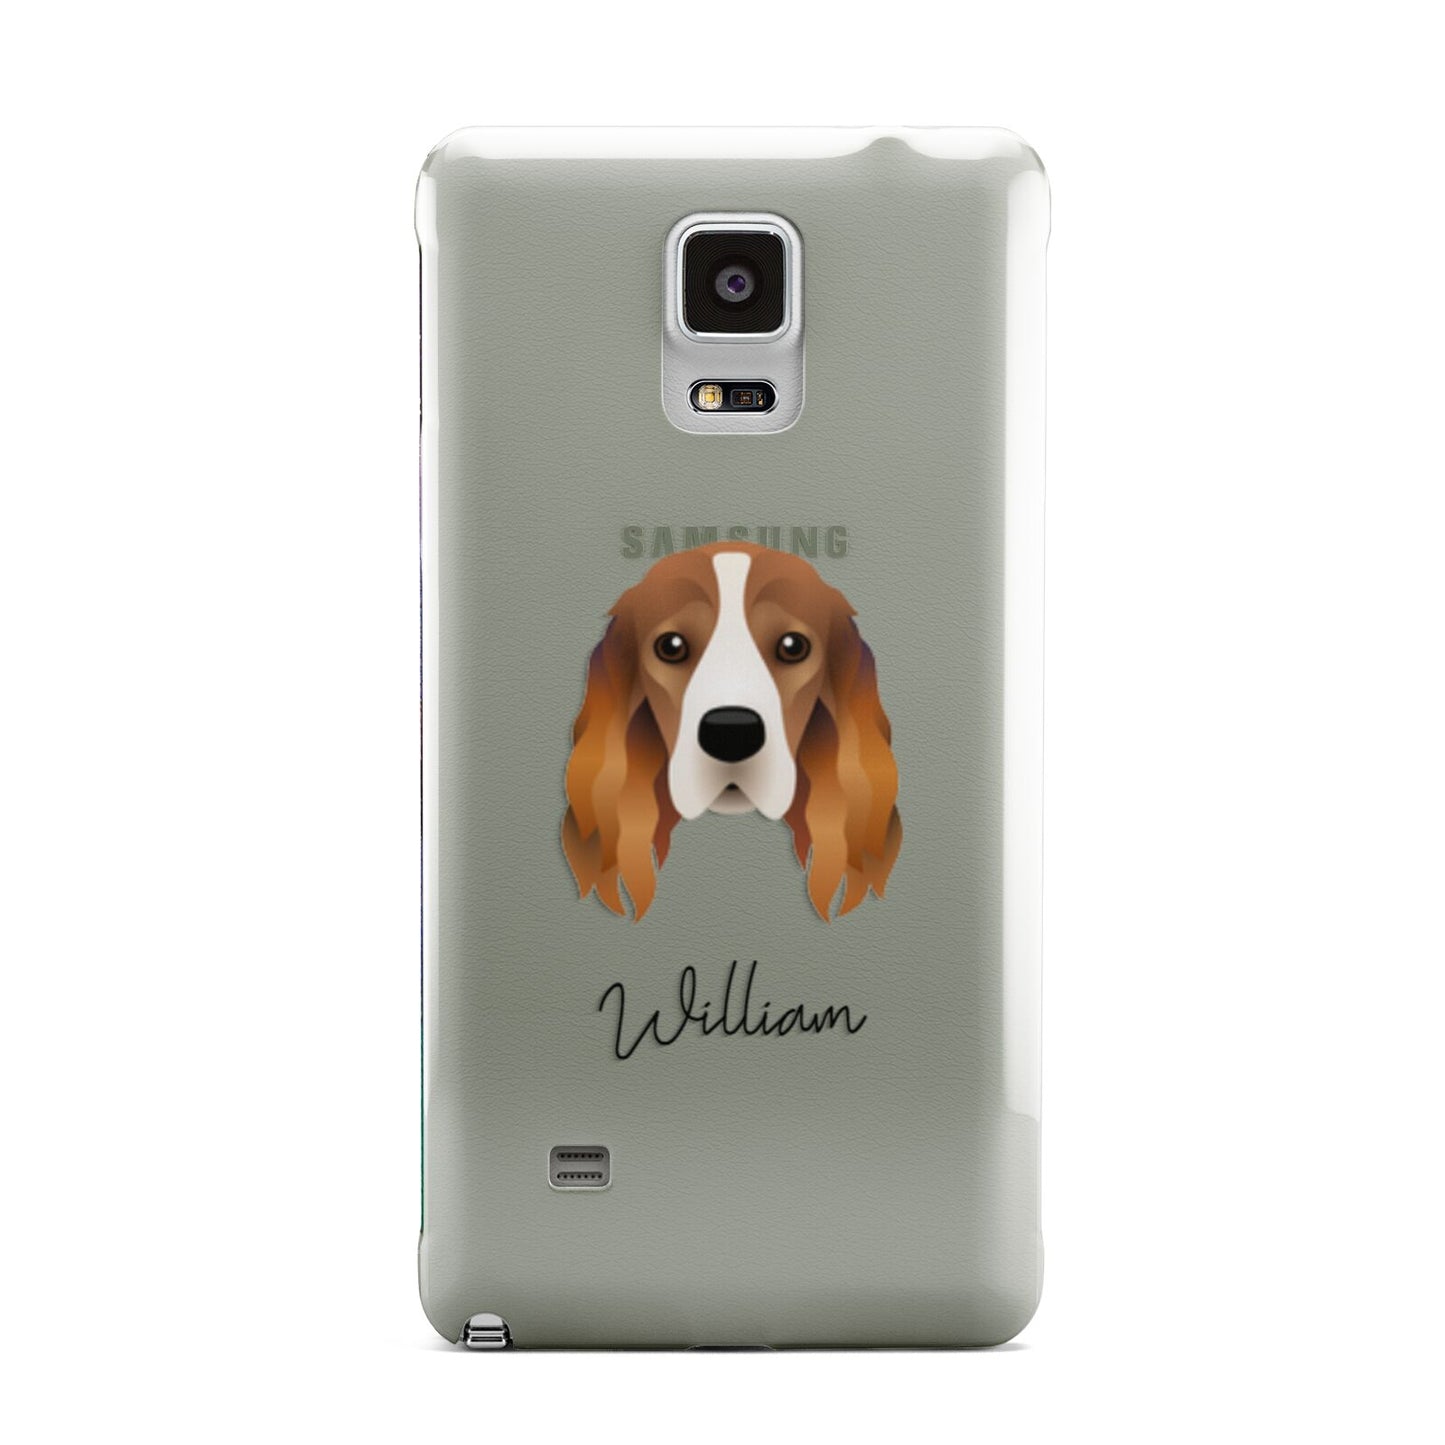 Cocker Spaniel Personalised Samsung Galaxy Note 4 Case